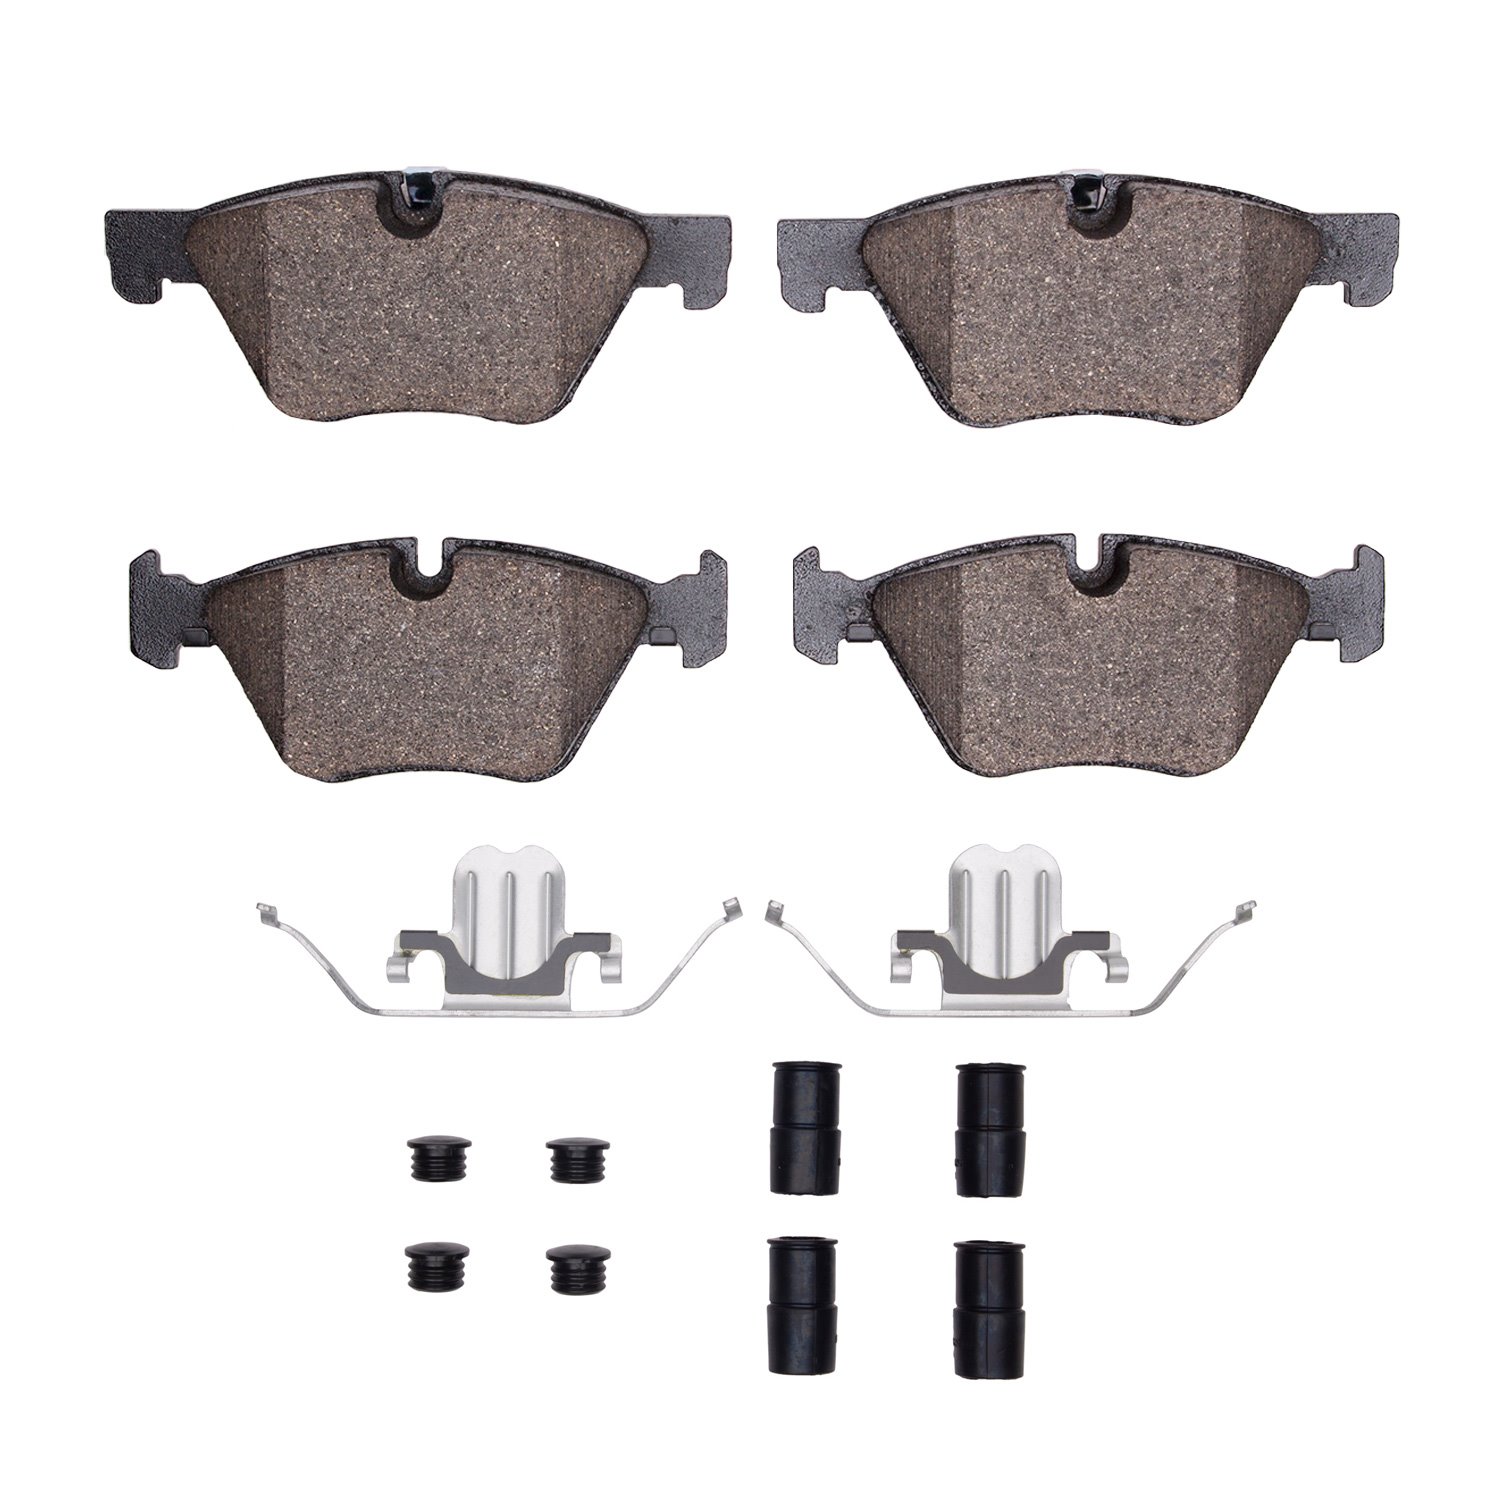 1552-1504-01 5000 Advanced Ceramic Brake Pads & Hardware Kit, 2012-2016 BMW, Position: Front